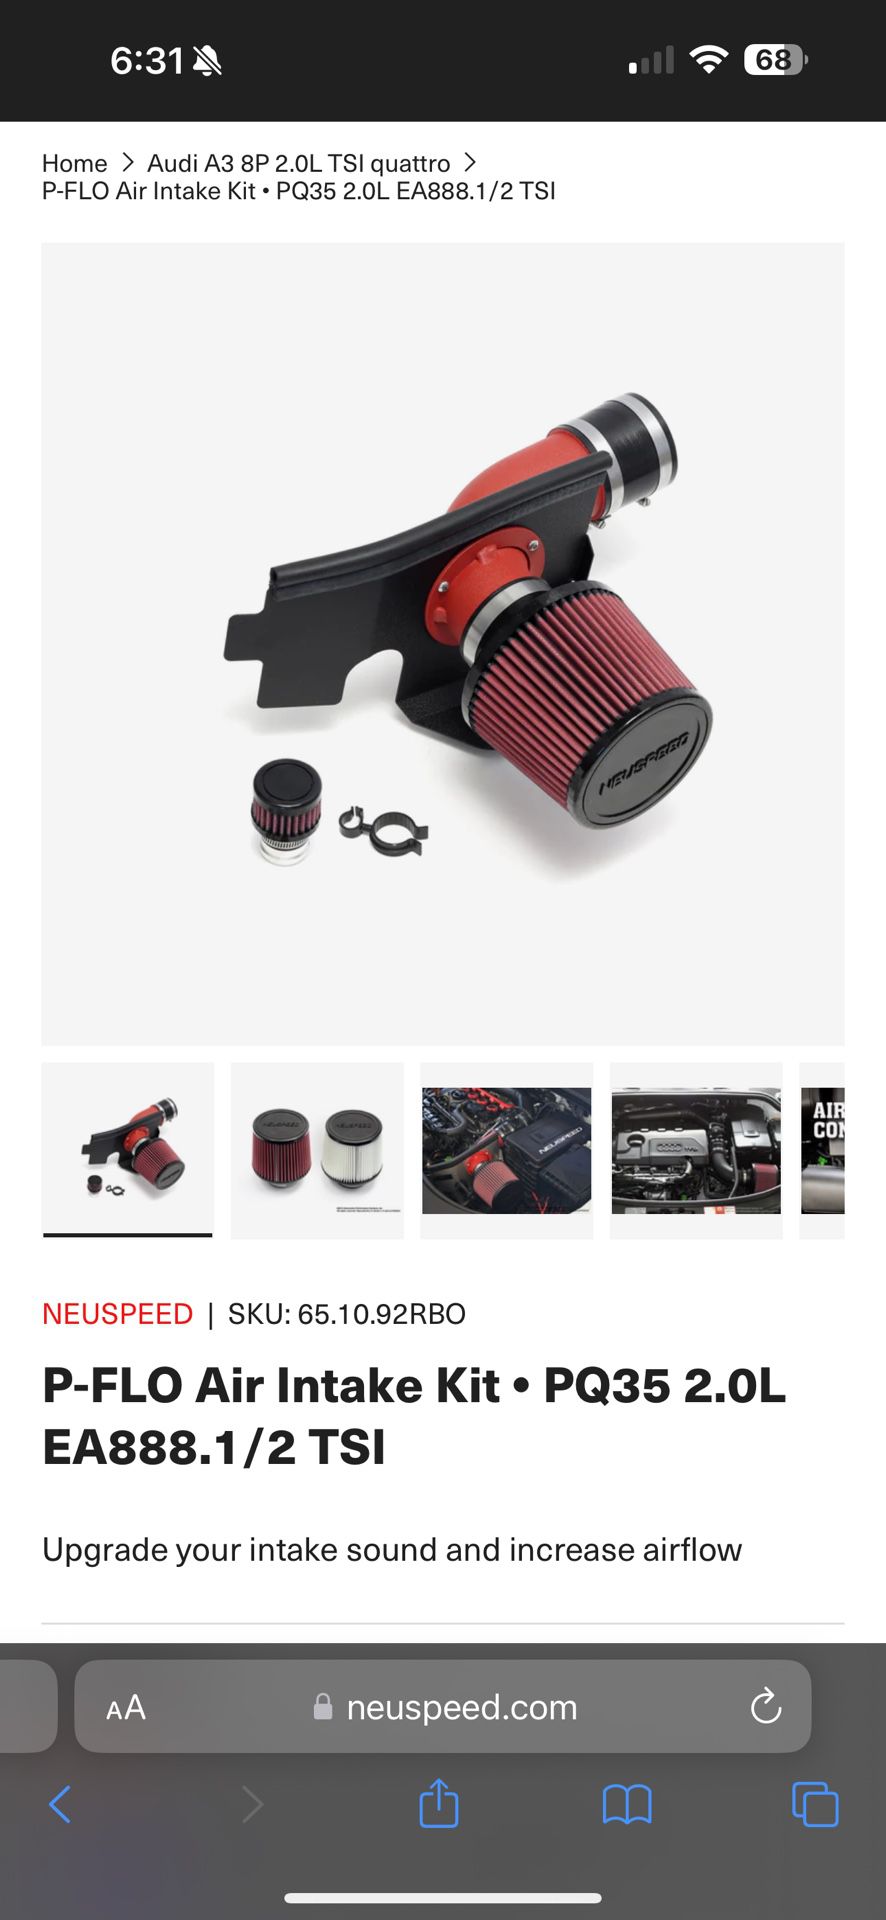 Cold Air Intake Neuspeed P-FLO Air Intake Kit For Audi & Volkswagen• PQ35 2.0L EA888.1/2 TSI